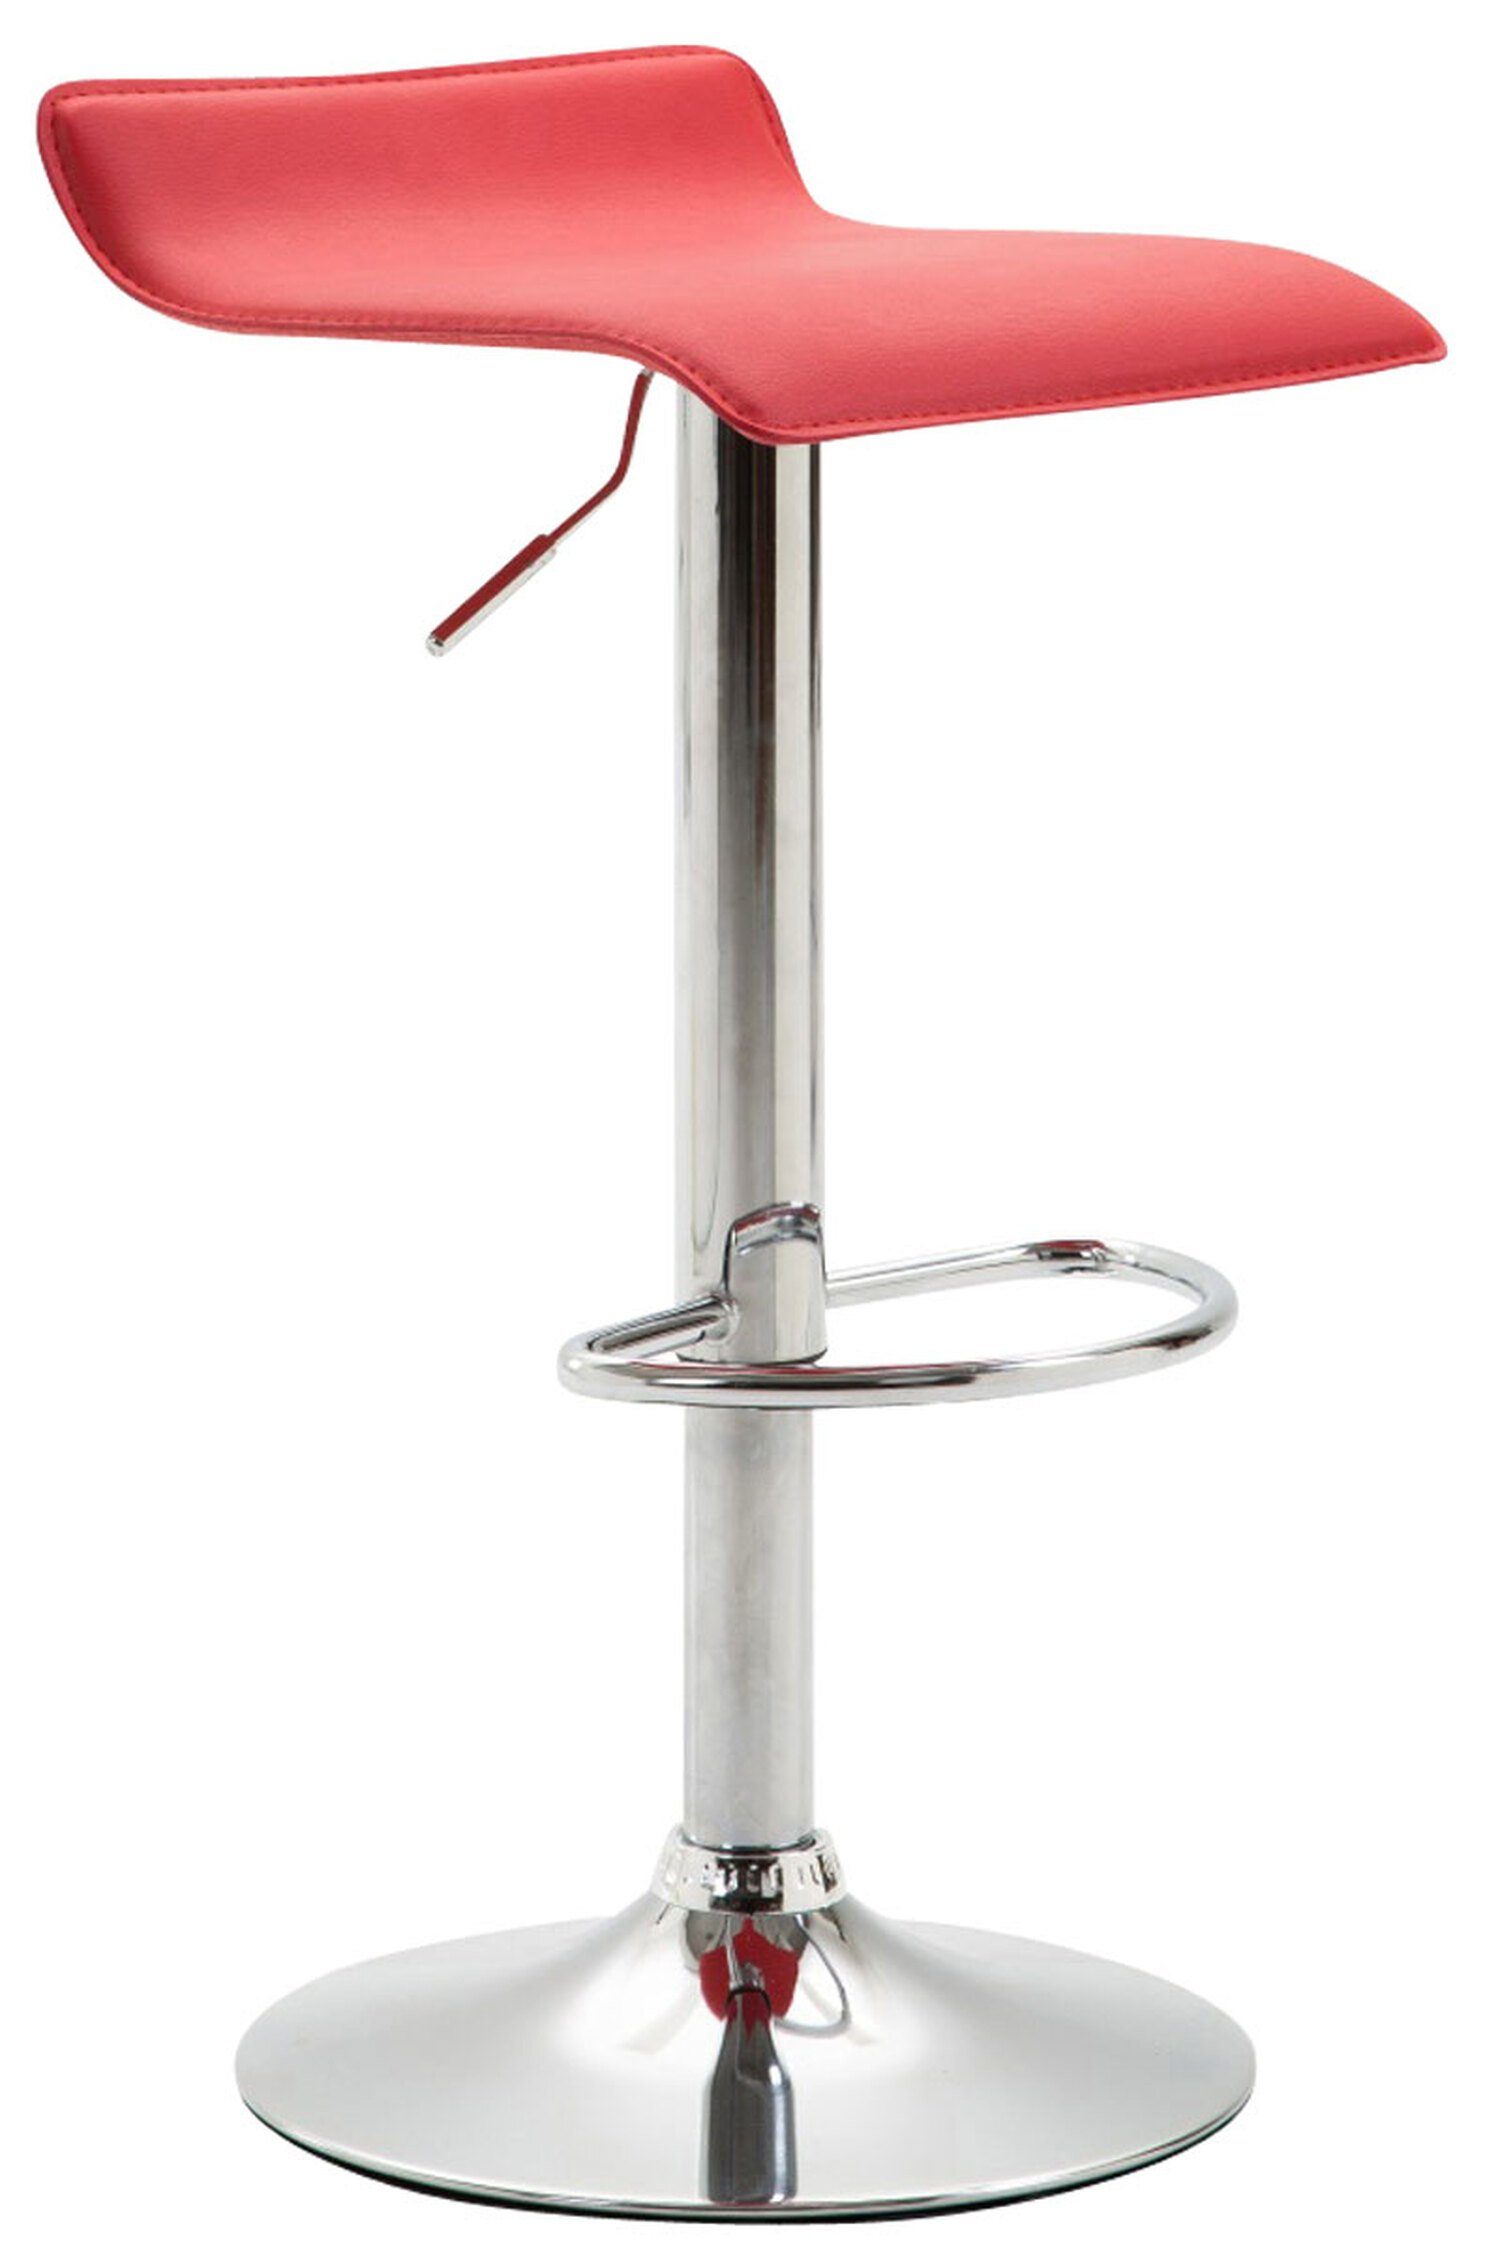 TPFLiving Barhocker Dynasty2 (mit Fußstütze - Barstuhl höhenverstellbar - Hocker für Theke & Küche), 360° drehbar - chromfarbener Stahl - Sitzfläche: Kunstleder Rot